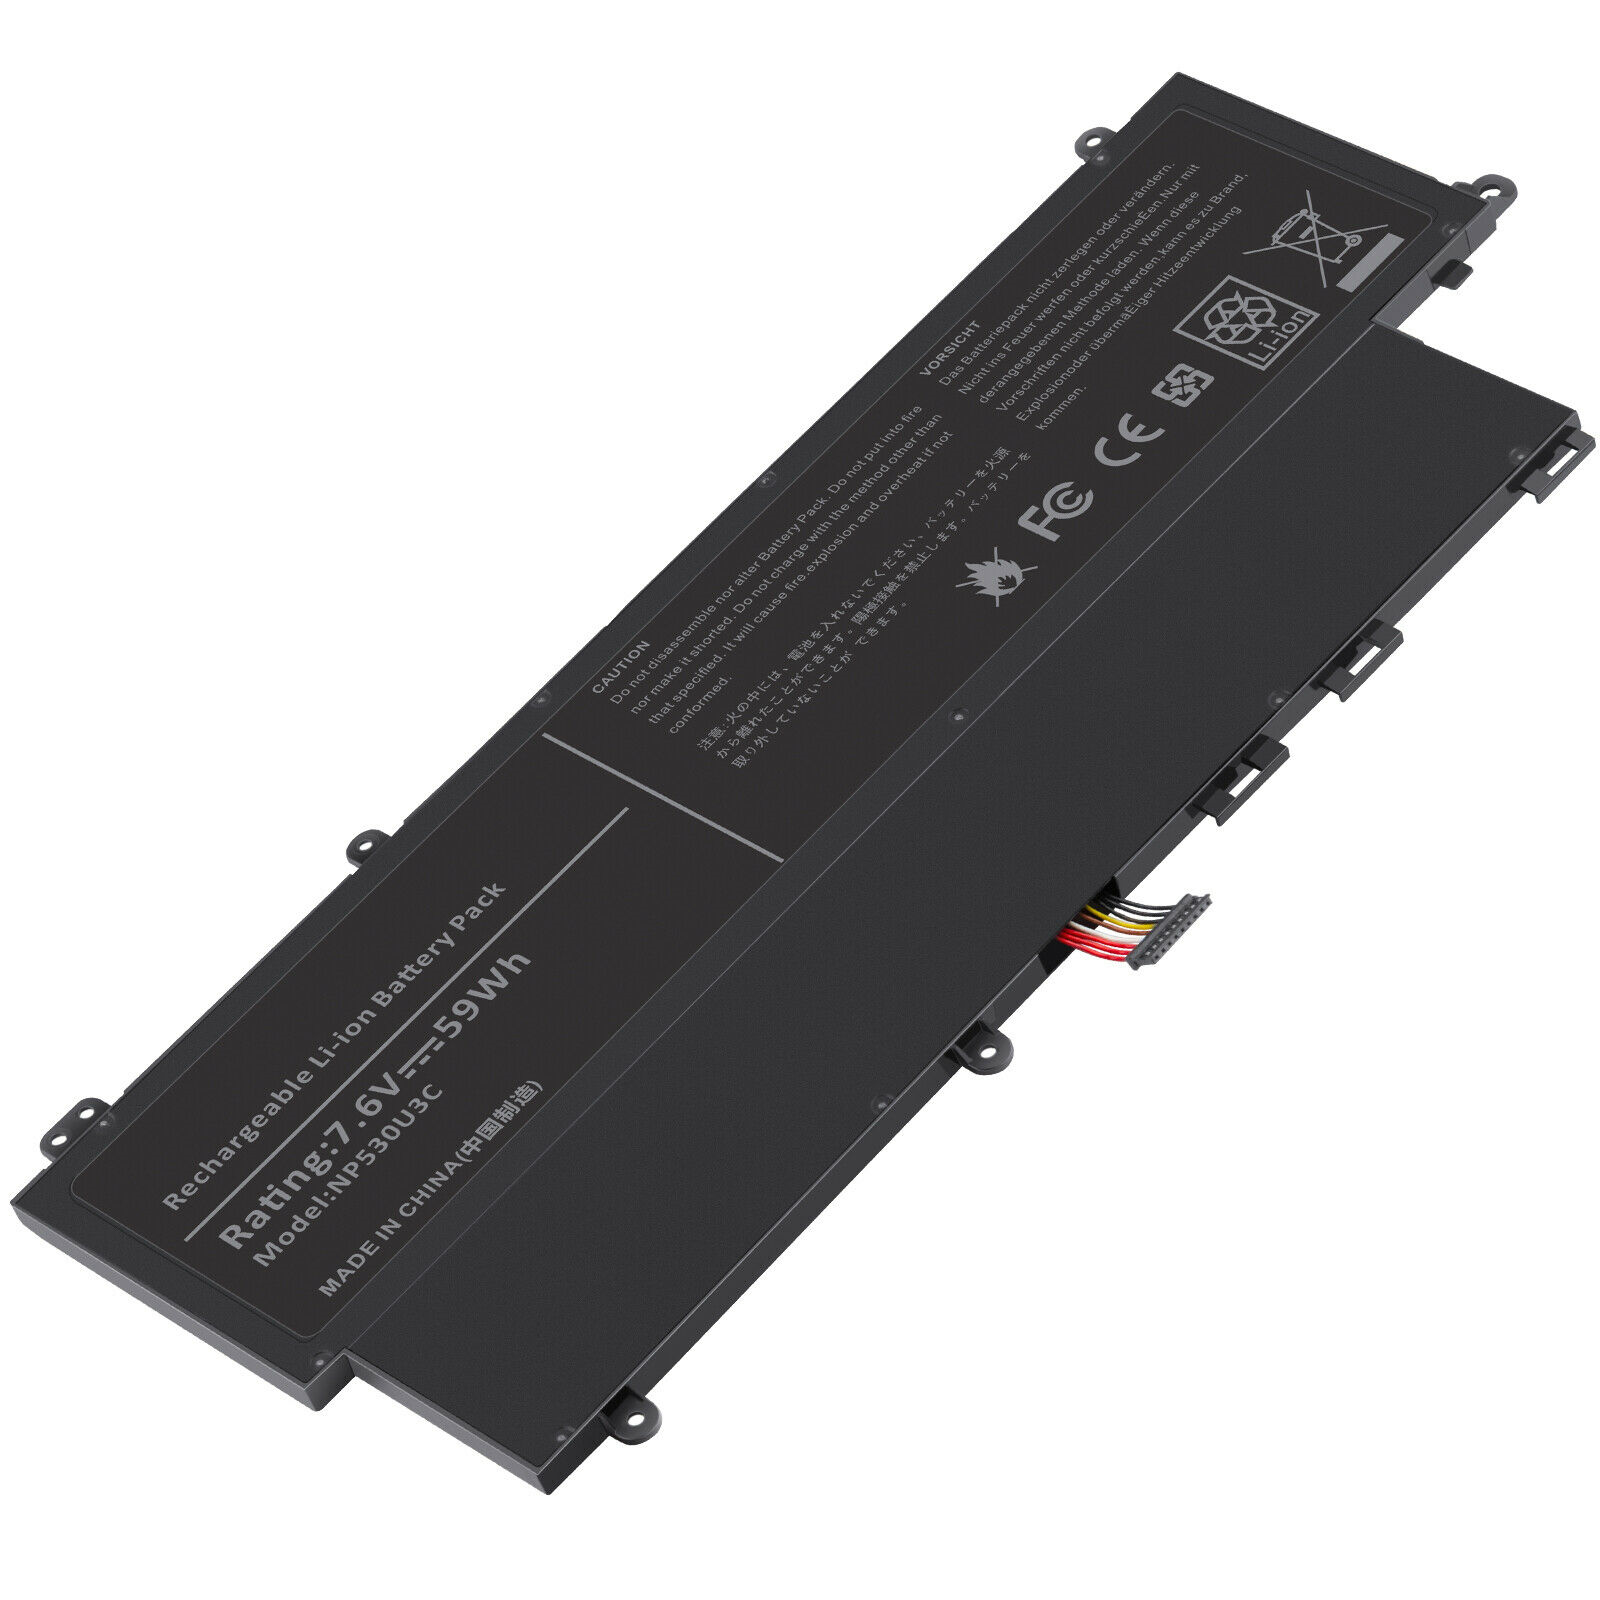 Samsung UltraBook 540U3C NP540U3C Series Replacement Battery